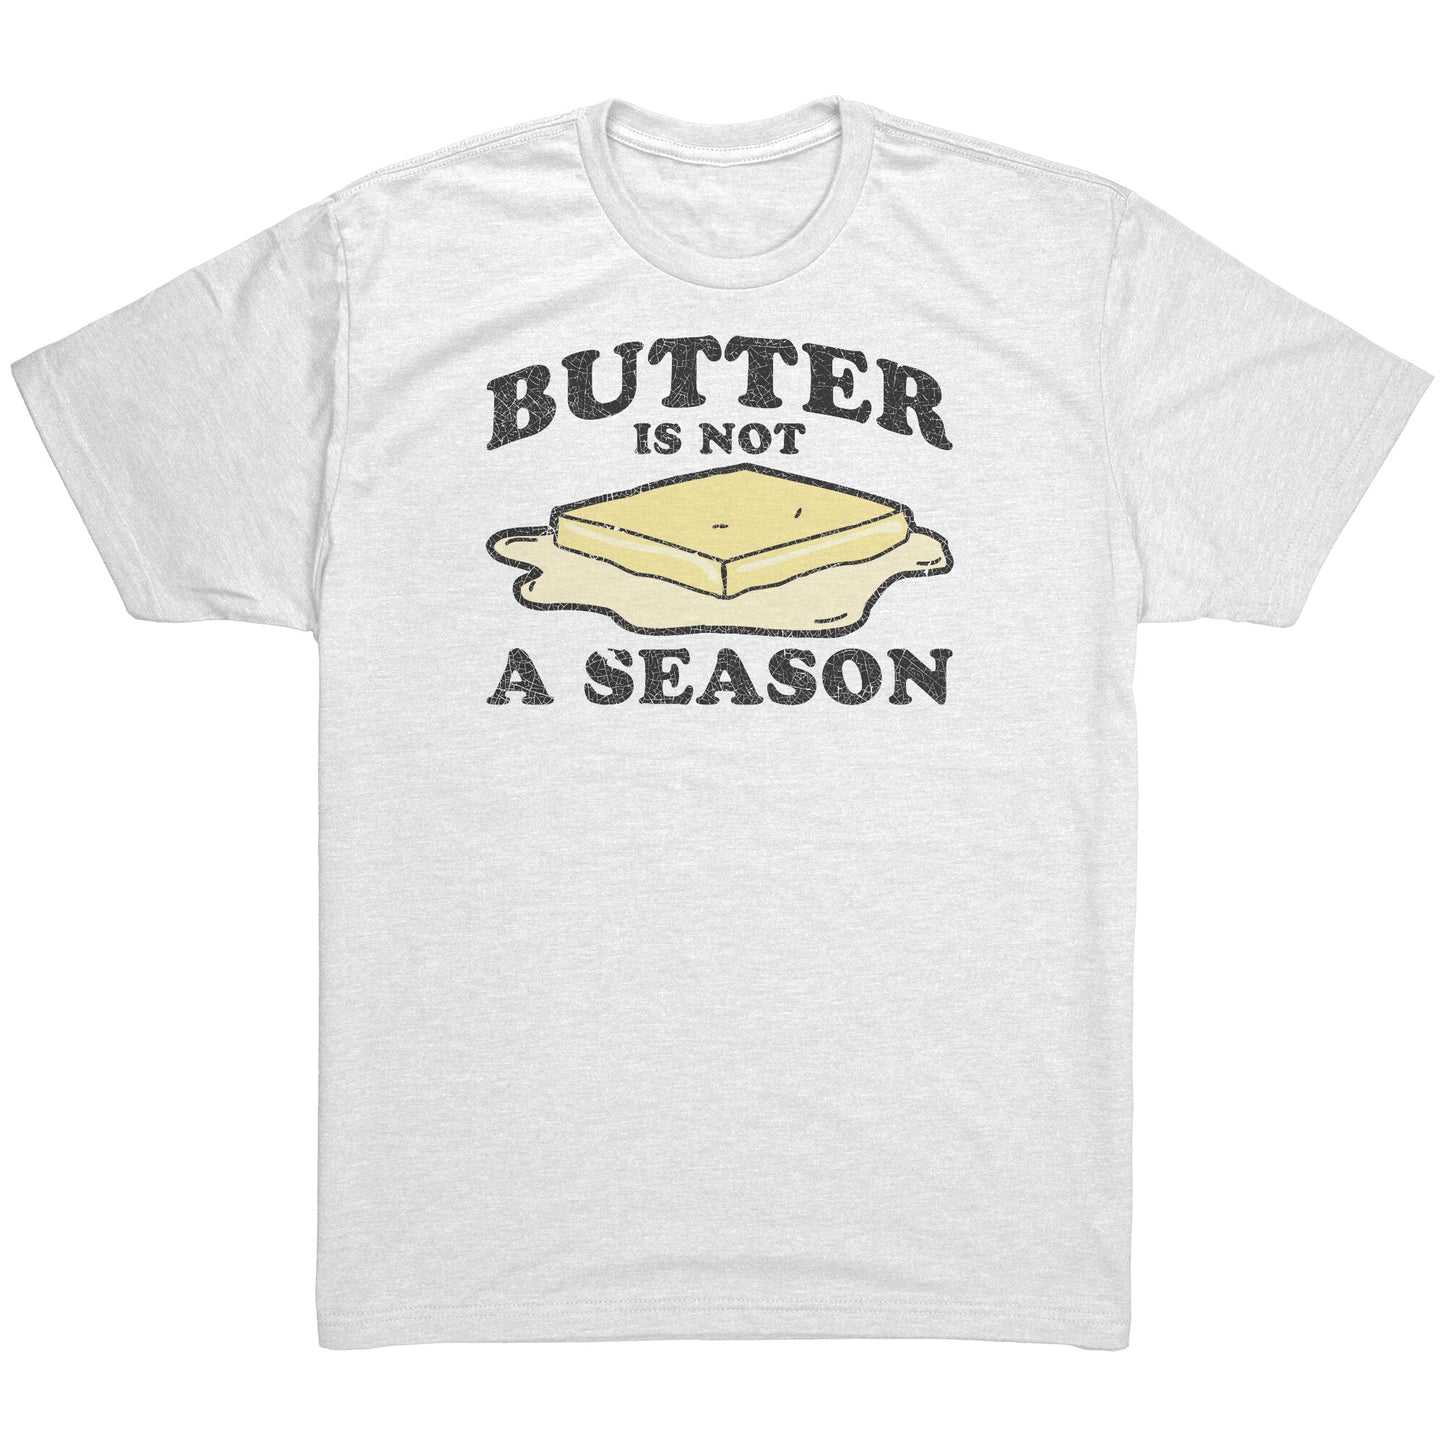 Butter is not a season